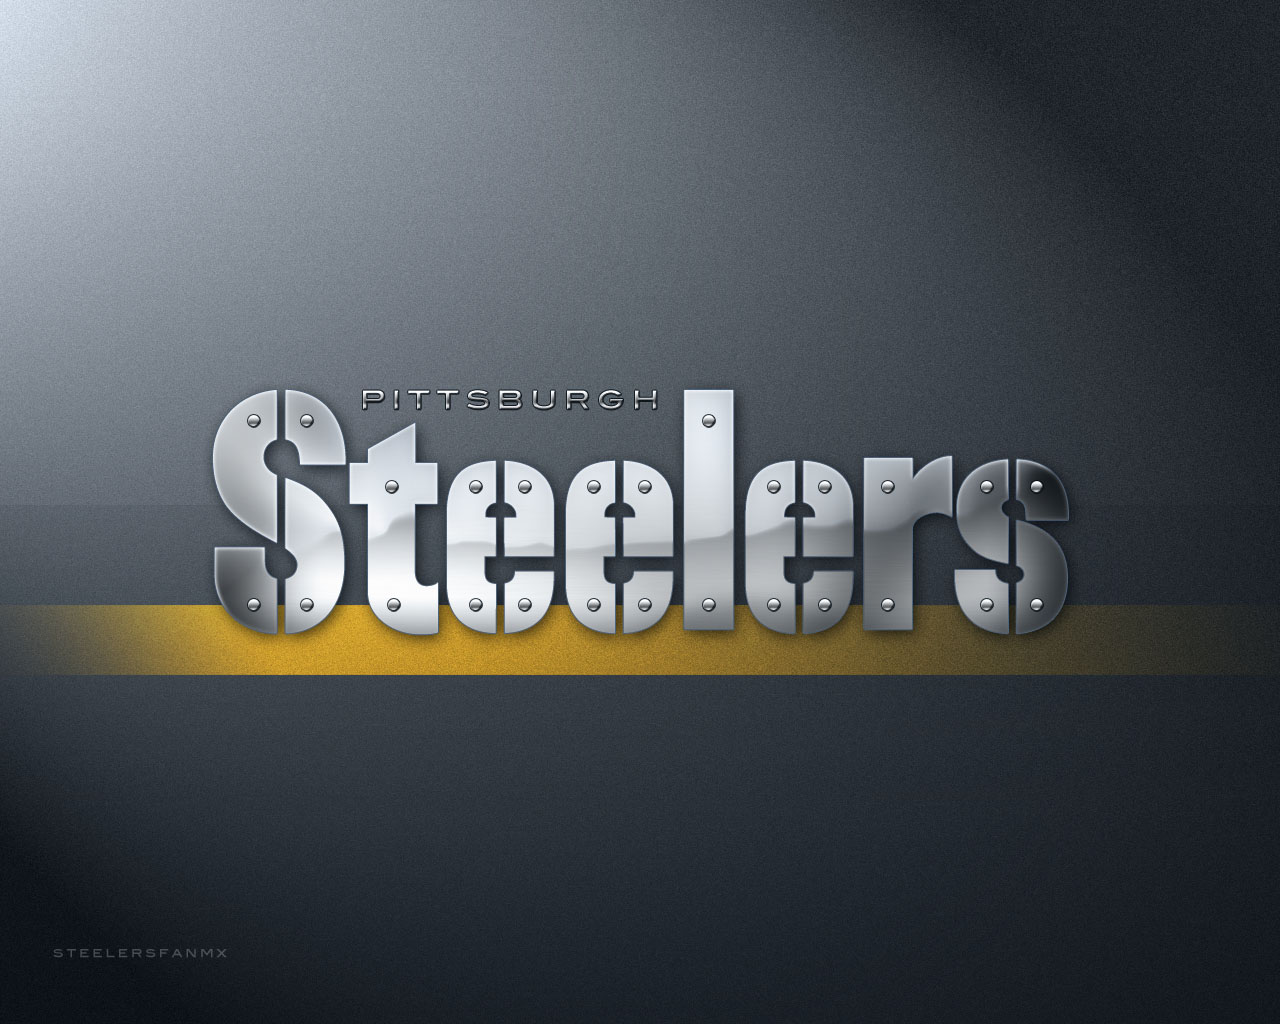  Pittsburgh Steelers desktop wallpaper Pittsburgh Steelers wallpapers